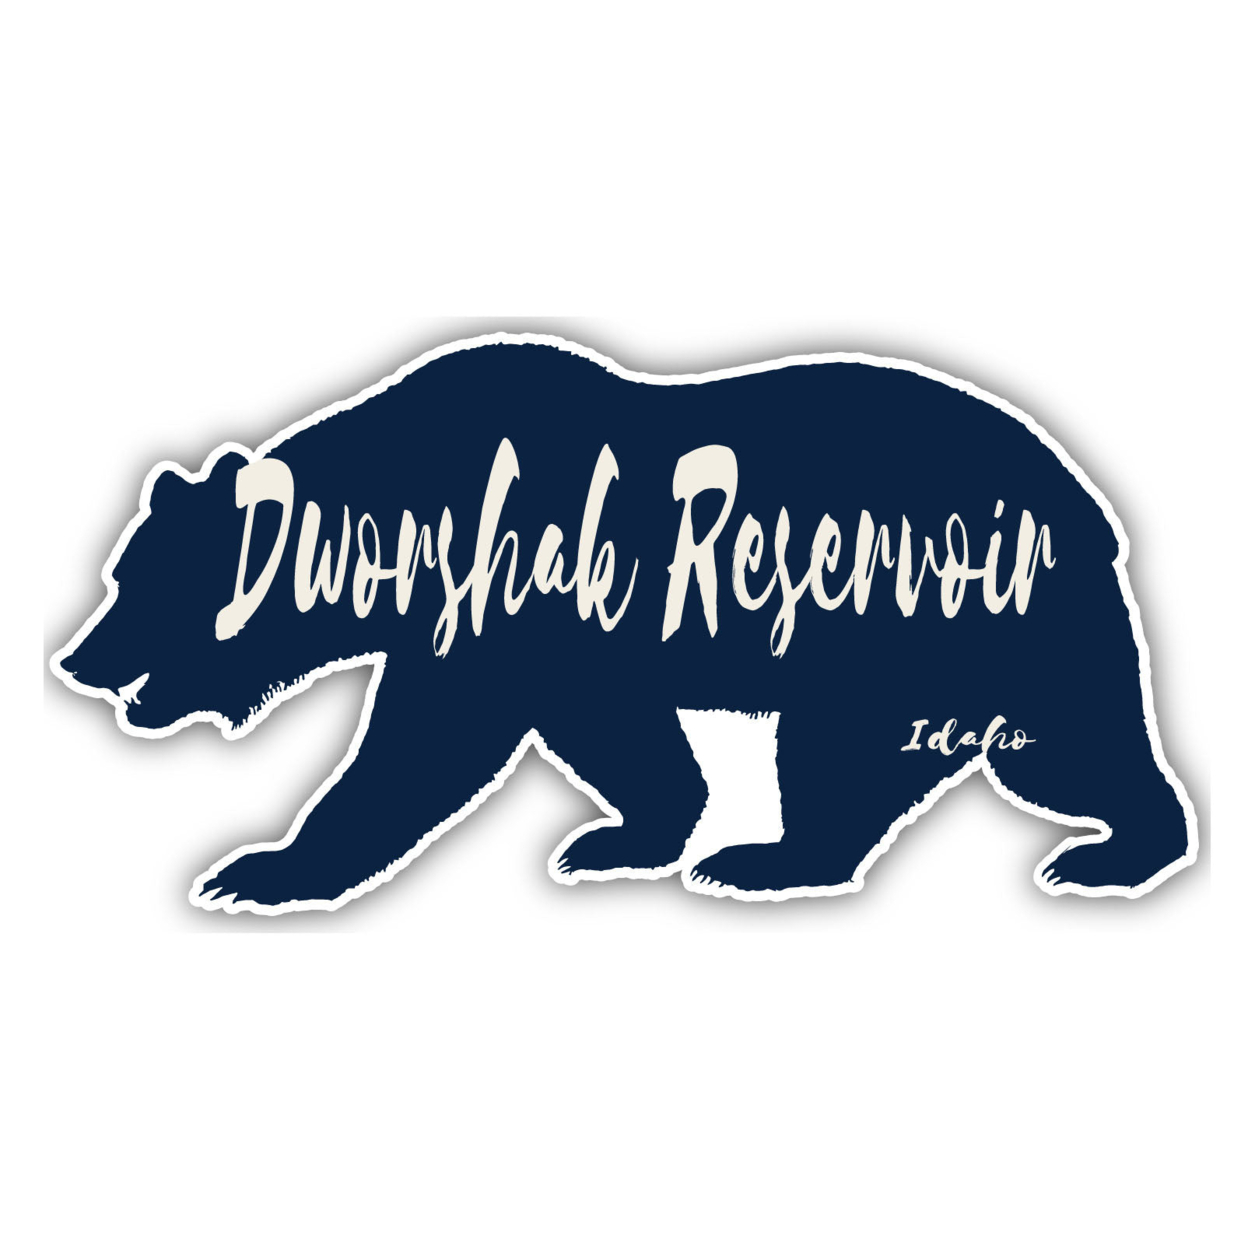 Dworshak Reservoir Idaho Souvenir Decorative Stickers (Choose Theme And Size) - 4-Pack, 6-Inch, Camp Life